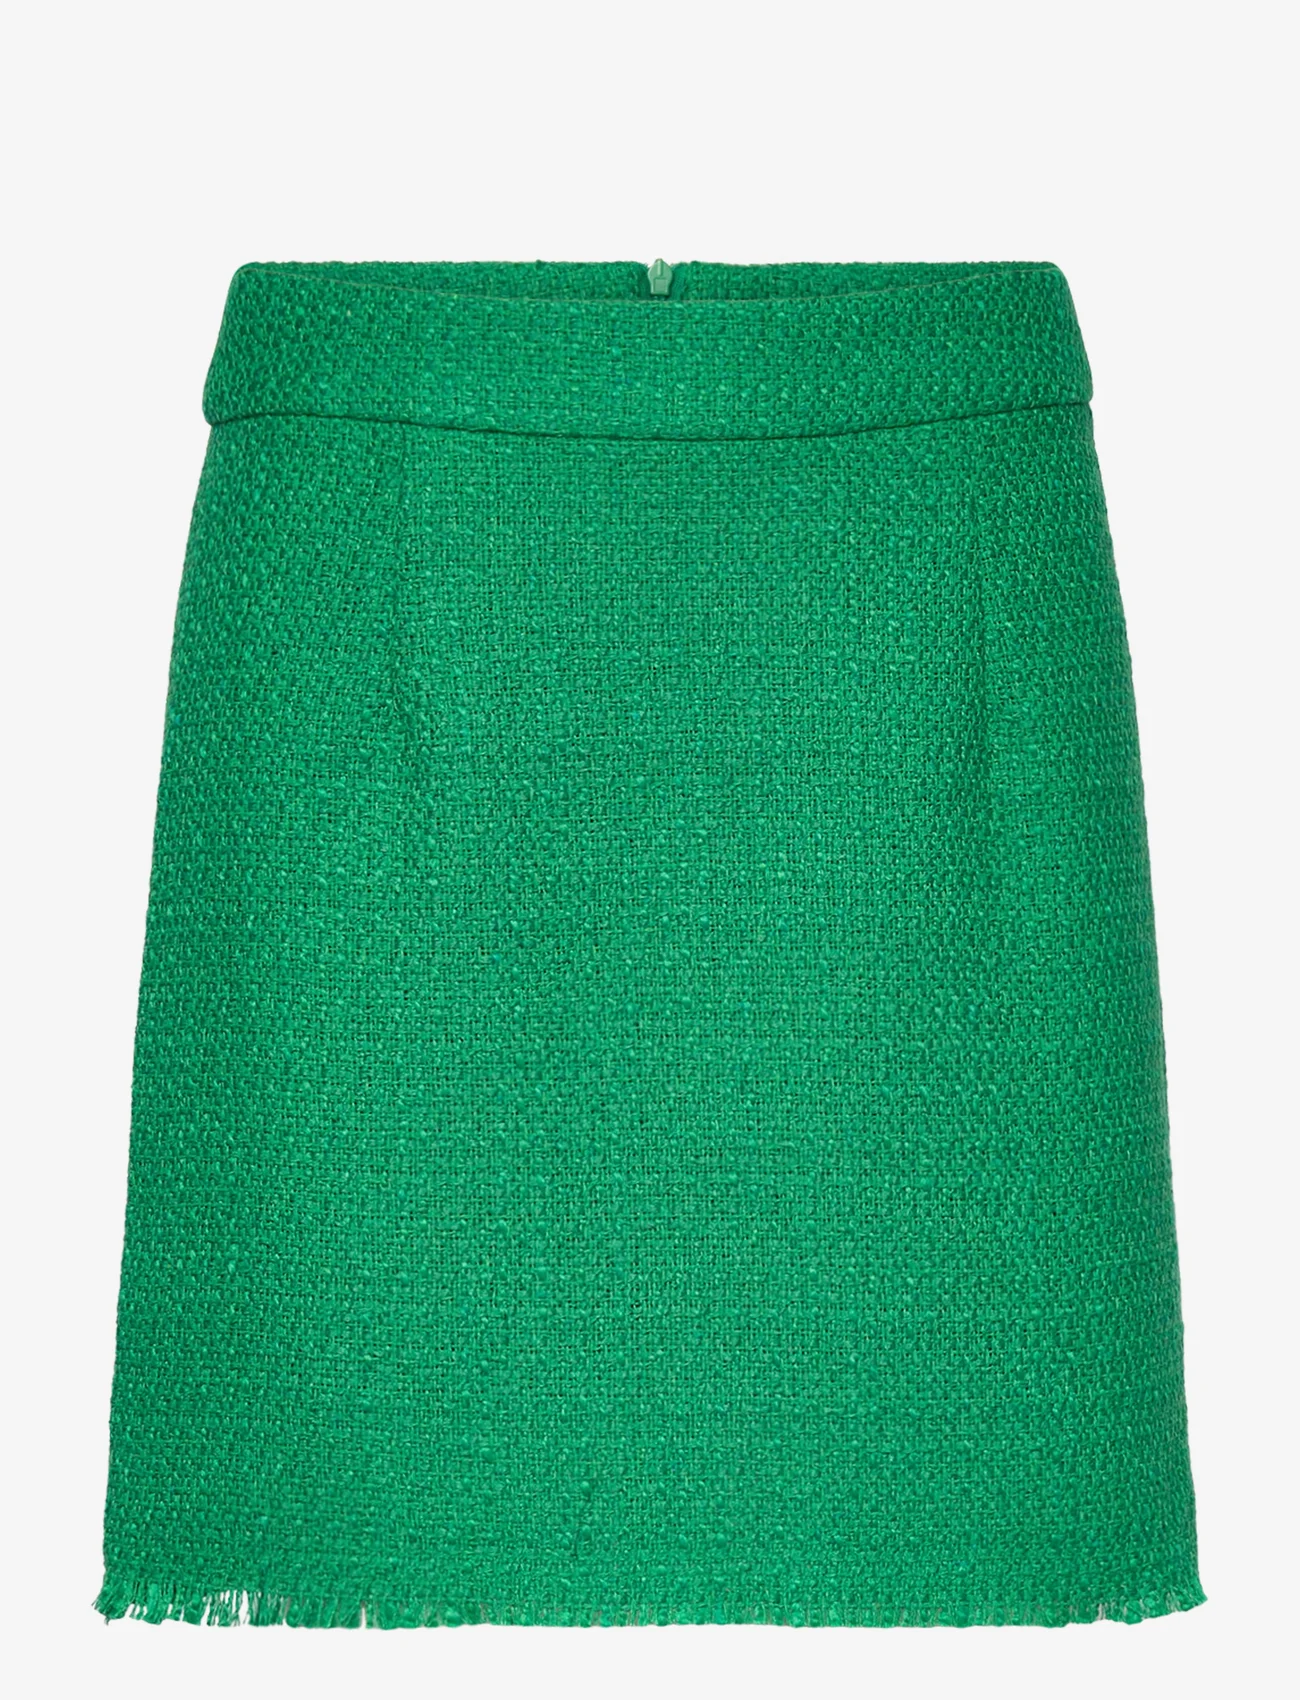 Saint Tropez - BirdieSZ Skirt - korte nederdele - verdant green - 0